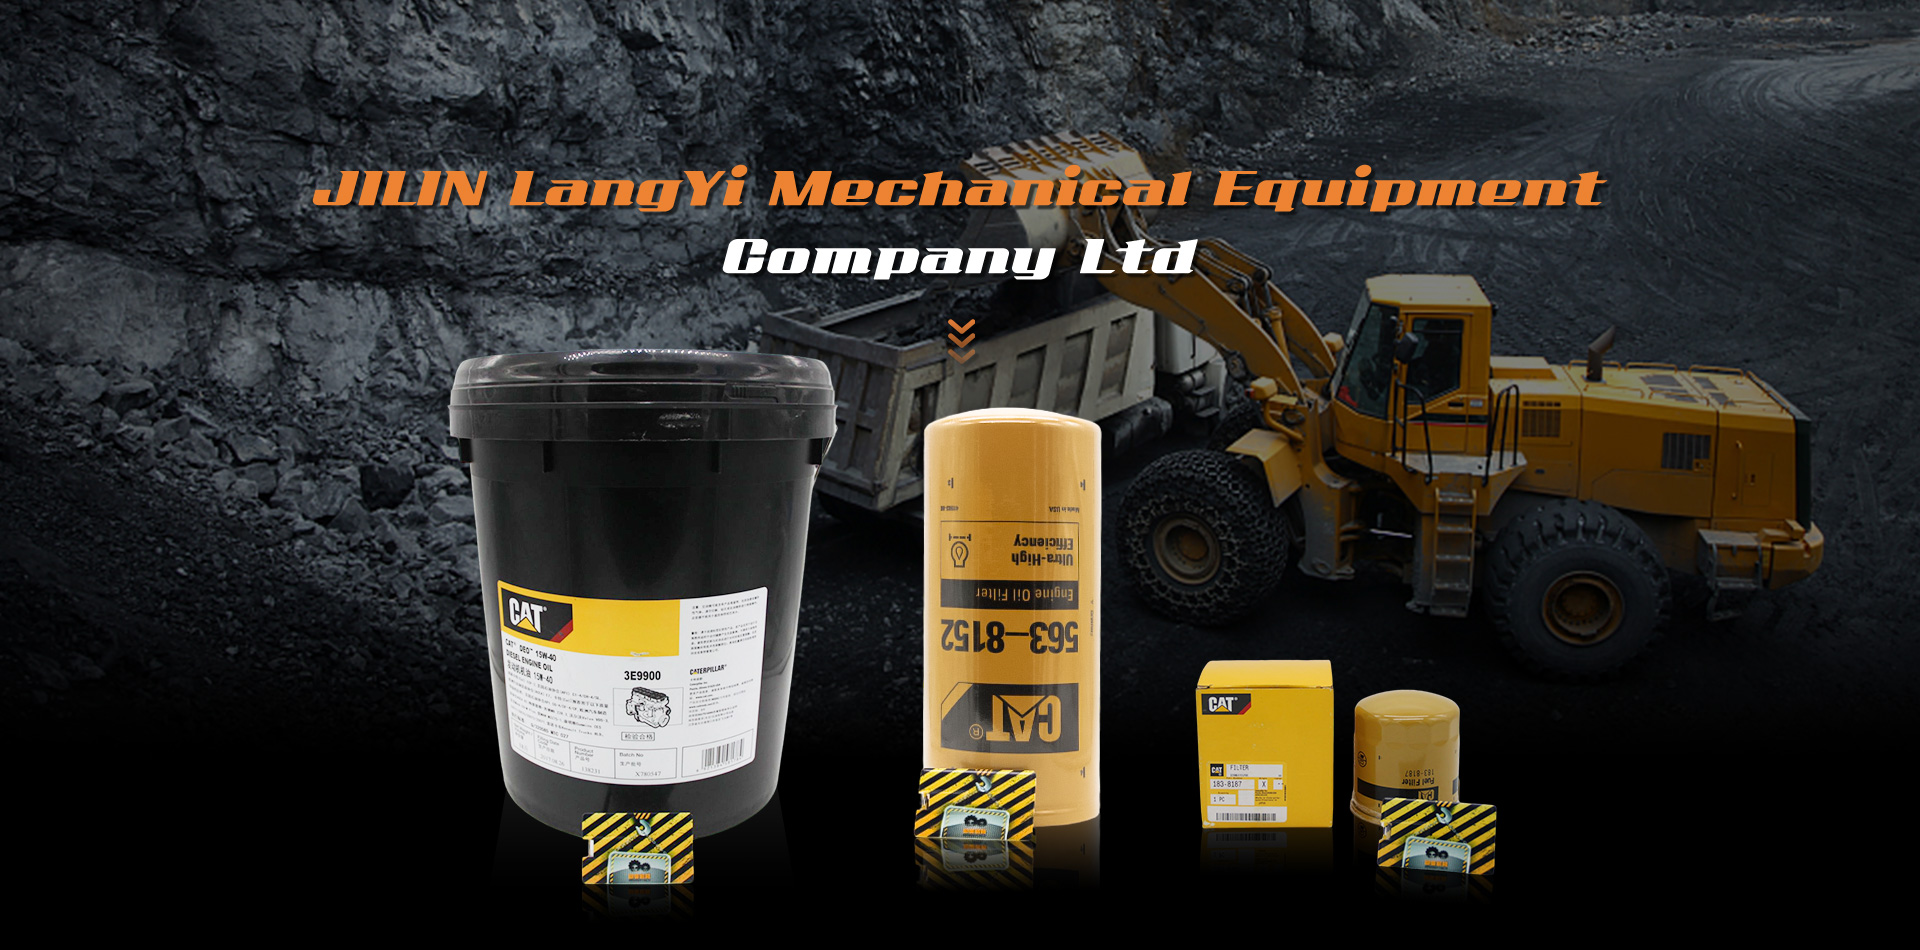 JiLin LangYi Mechanical Equipment Company Ltd.